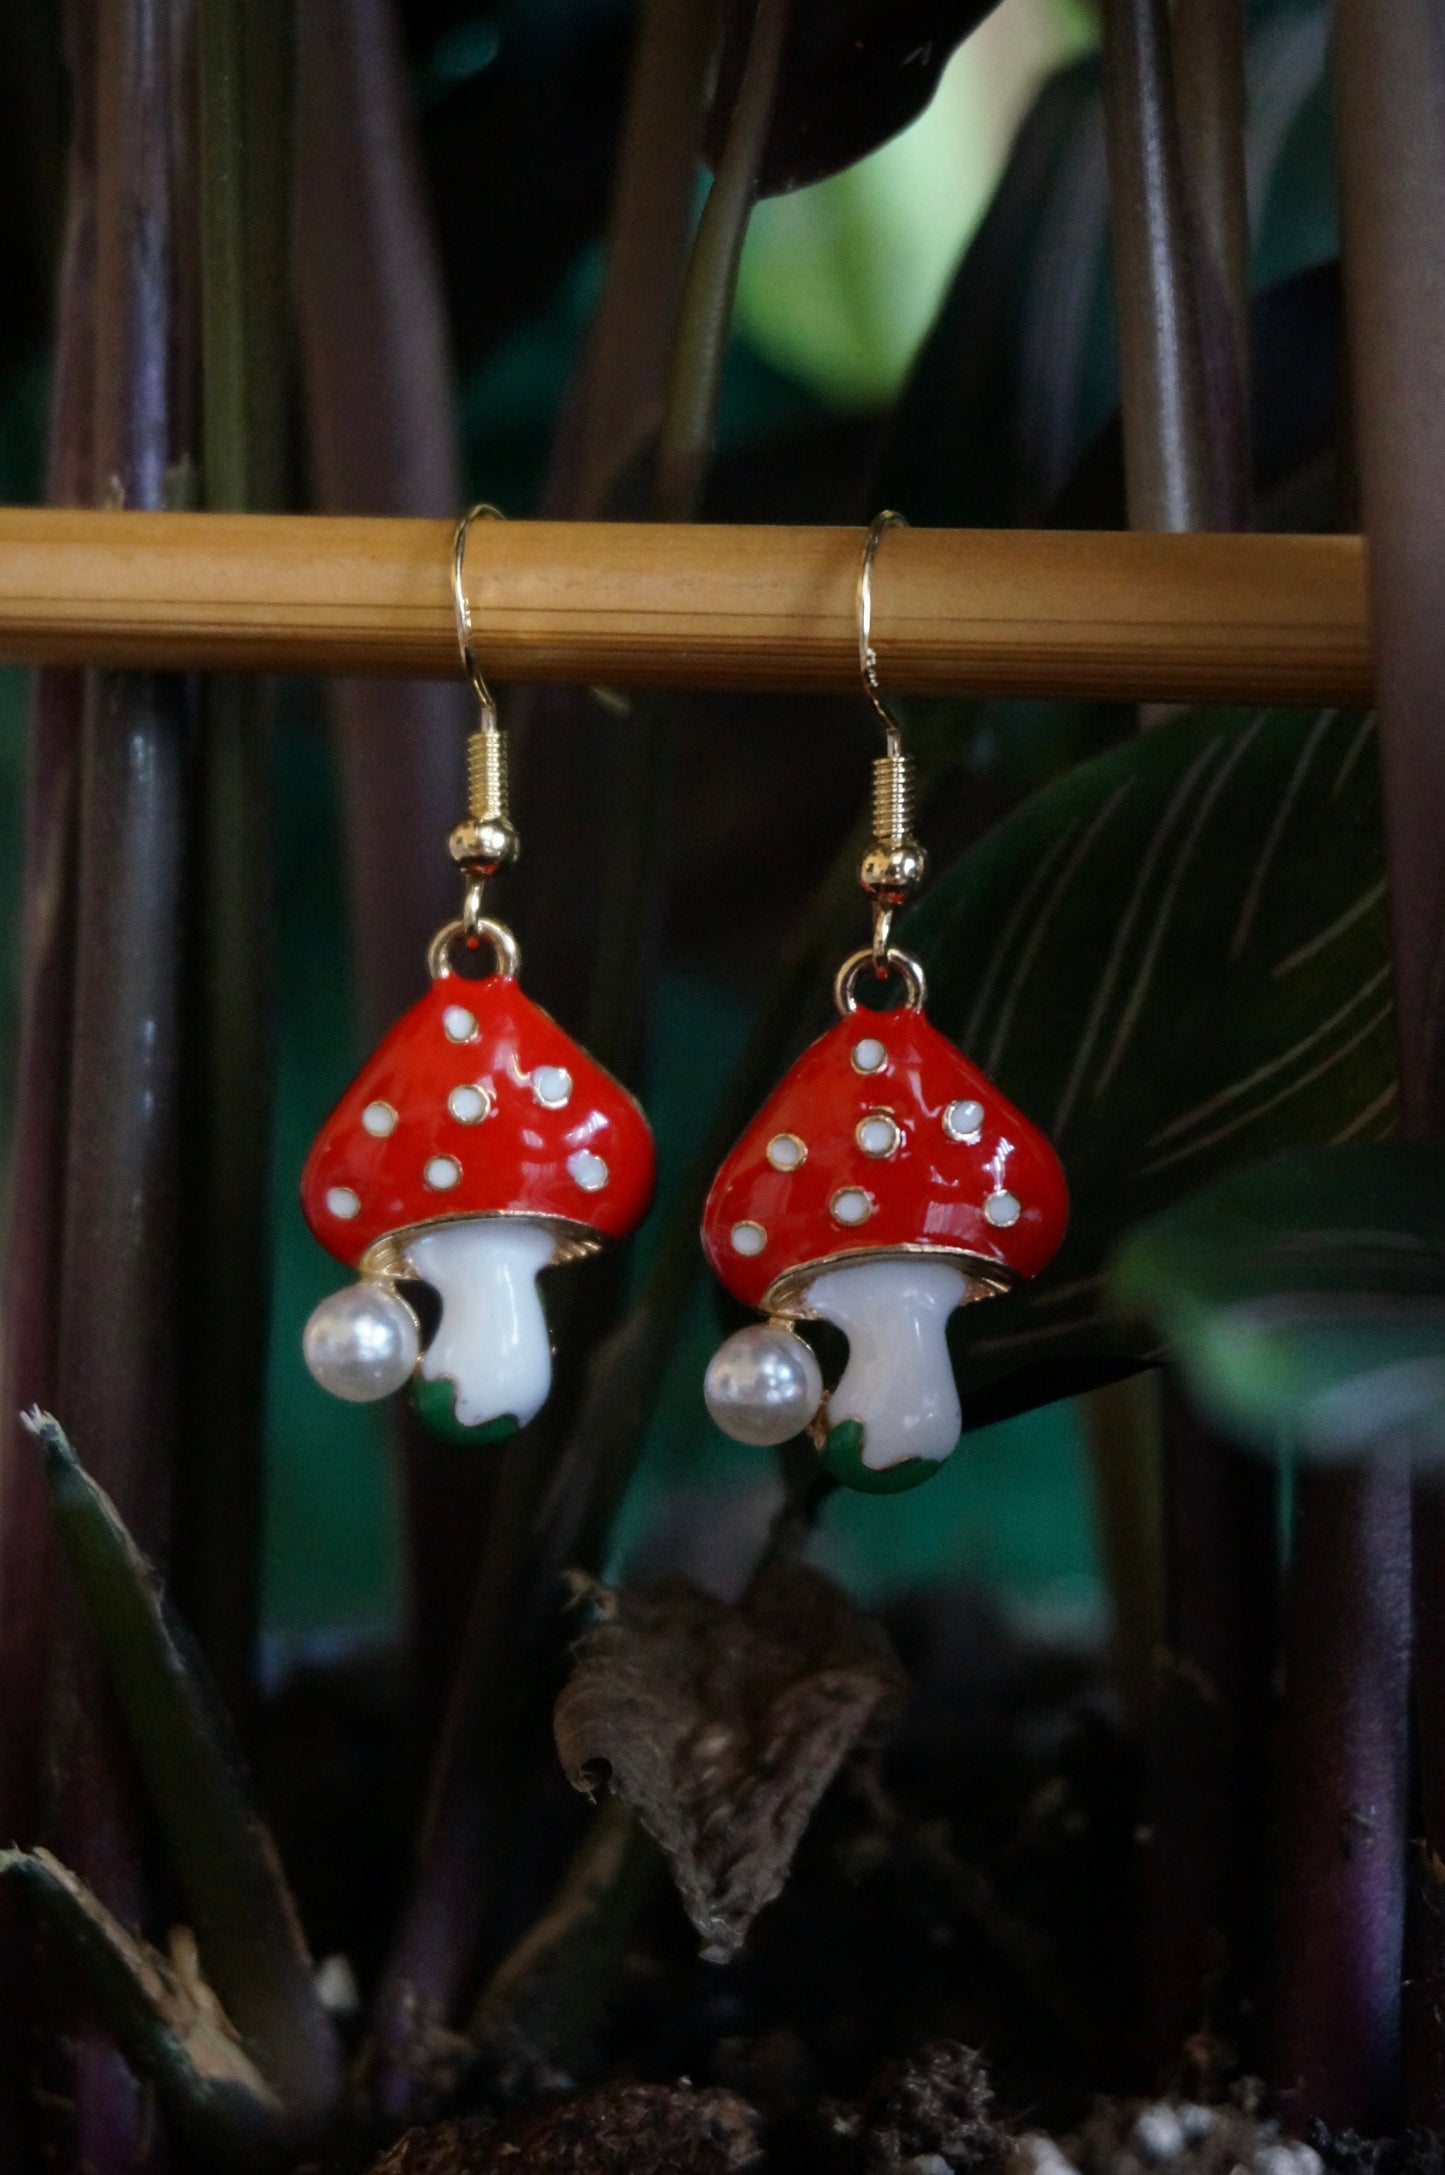 Pearl Mushroom Earrings